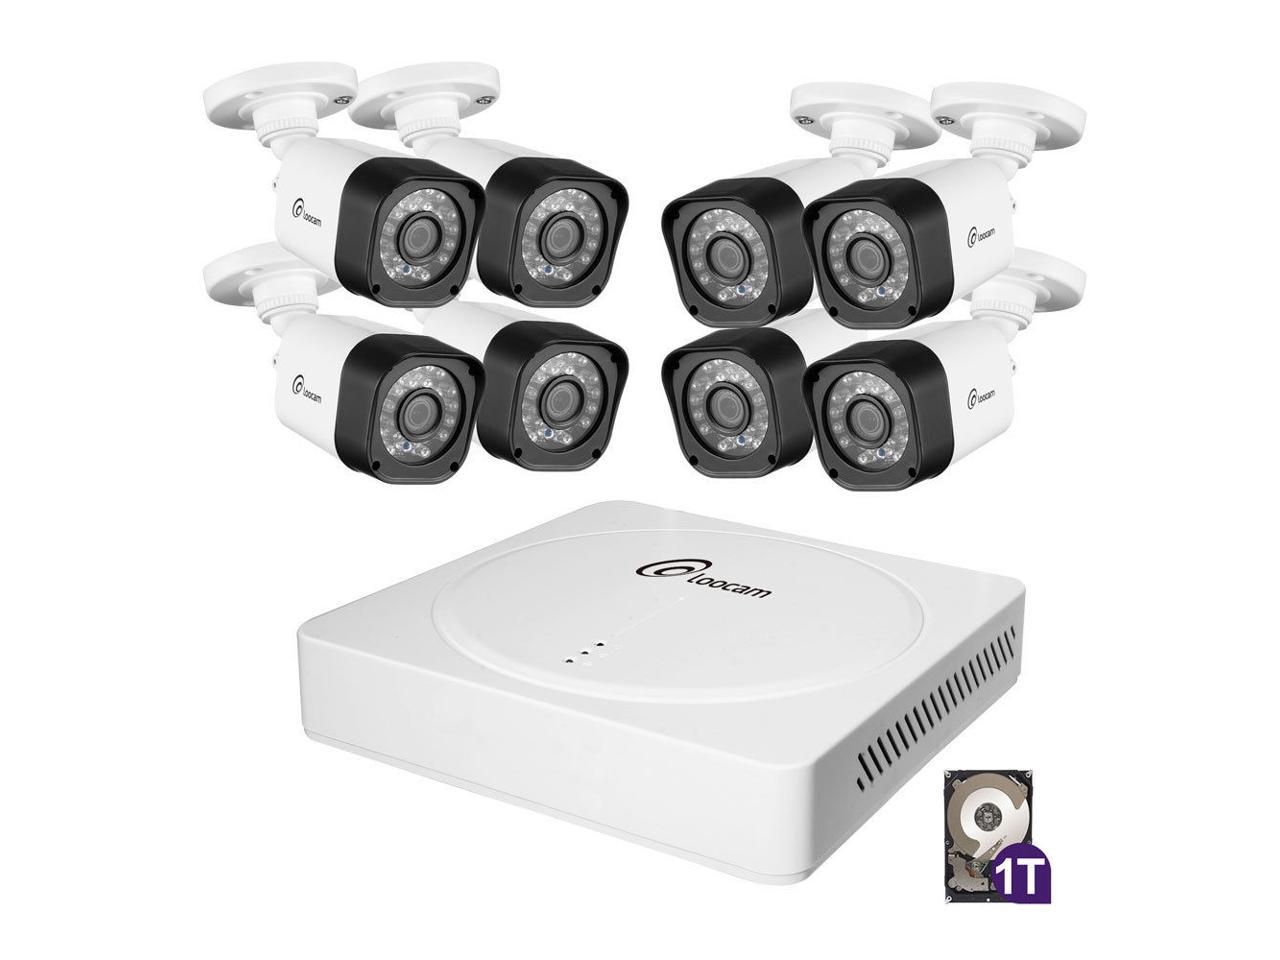 Loocam Surveillance Security Camera System (More Options)